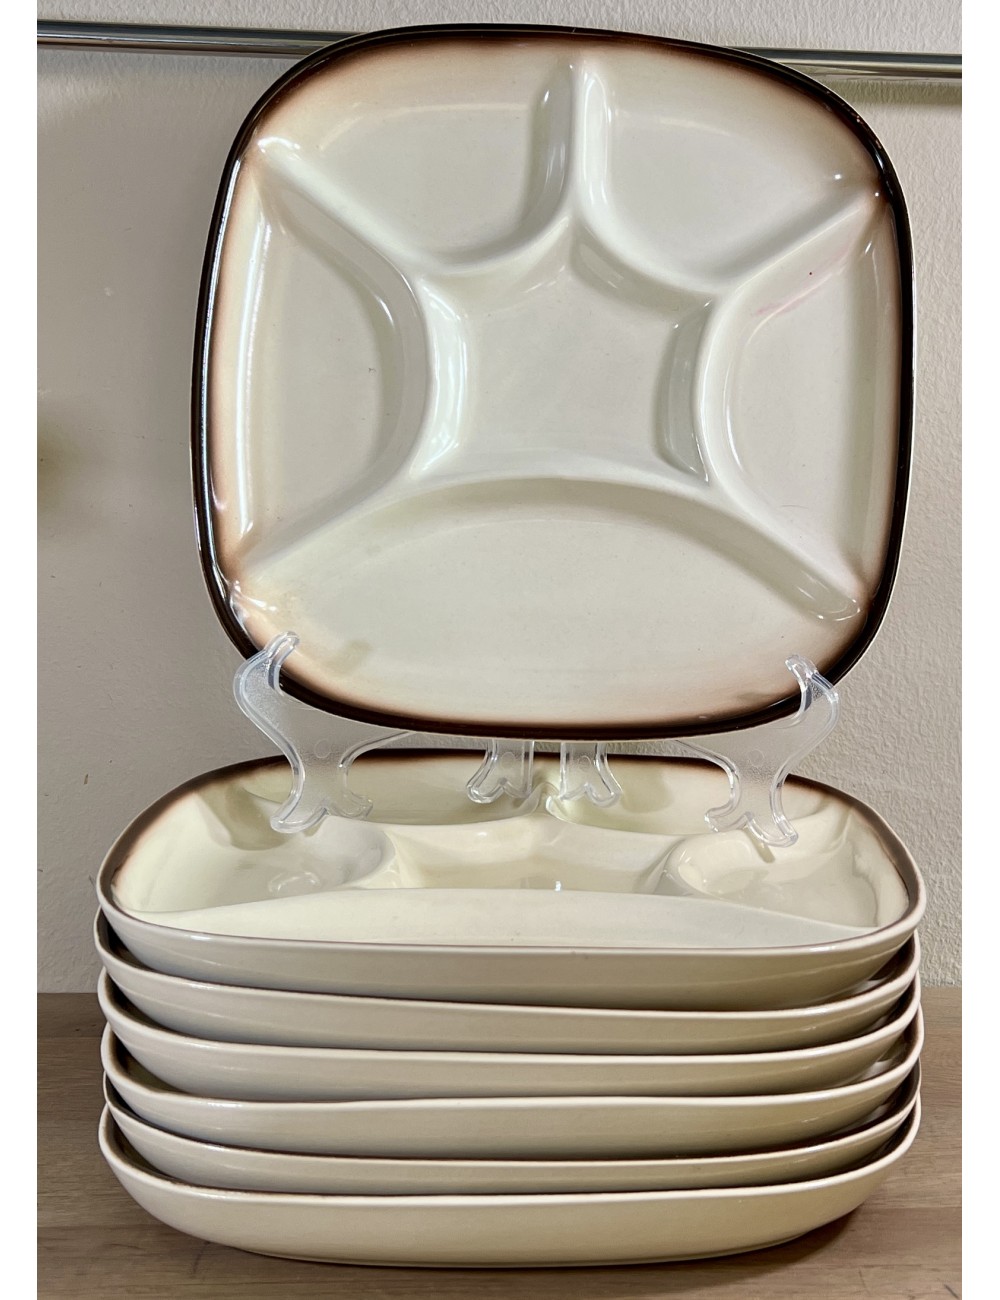 Fondue plate / Gourmet plate - square model - Boch - shape MENUET? - décor SIERRA in brown/cream finish